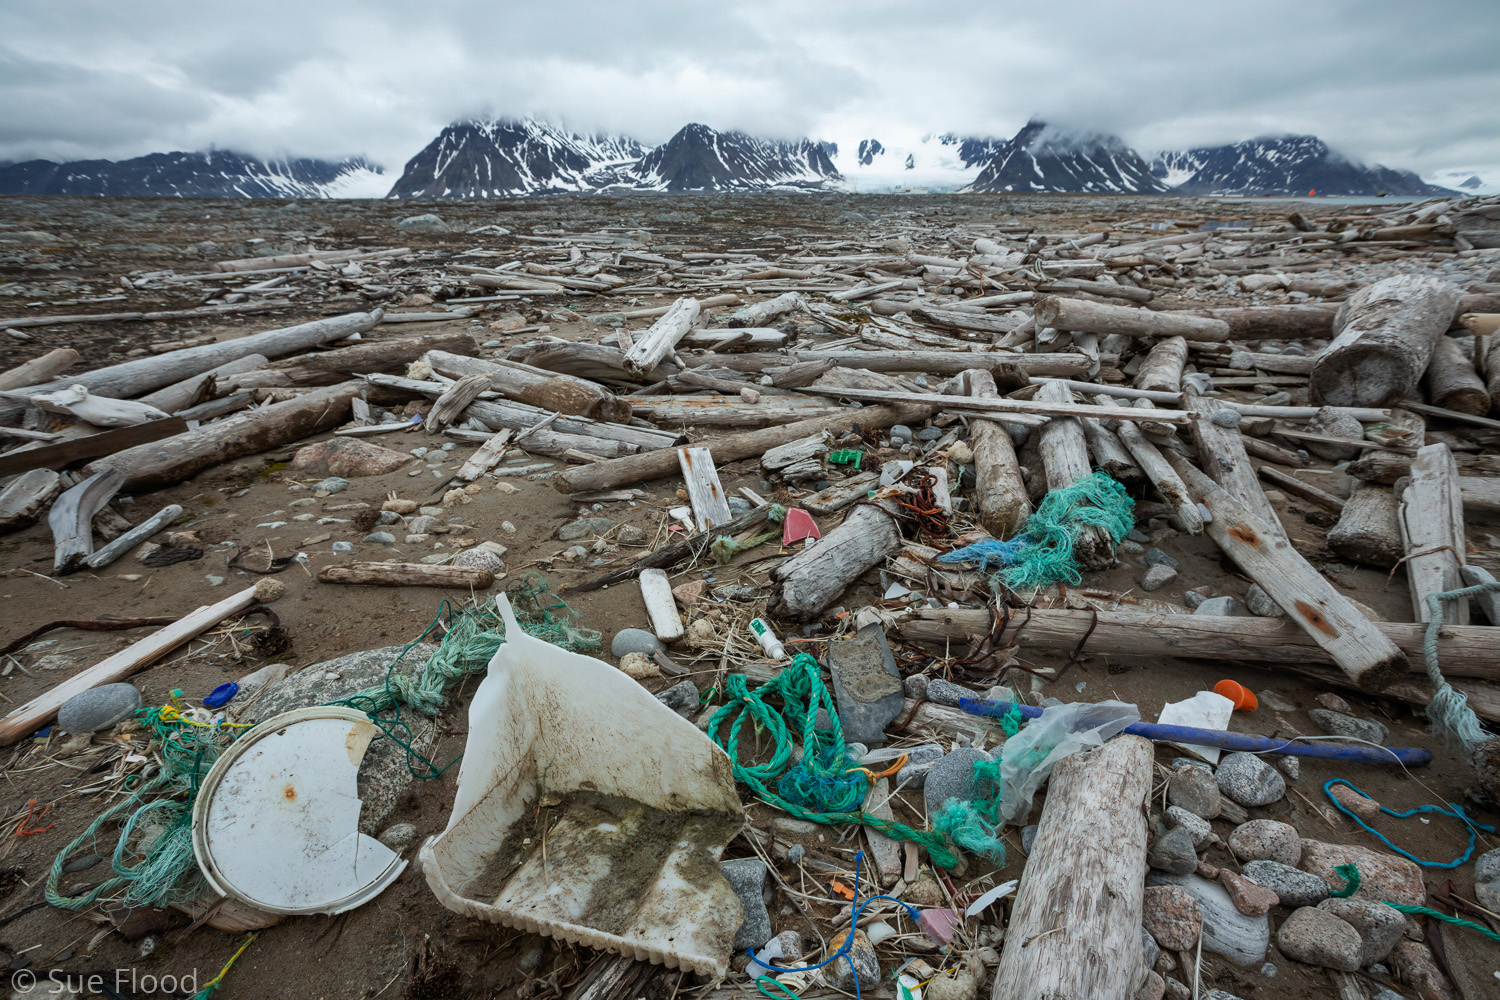 Plastic debris on beach in Svalbard, Norwegian Arctic.